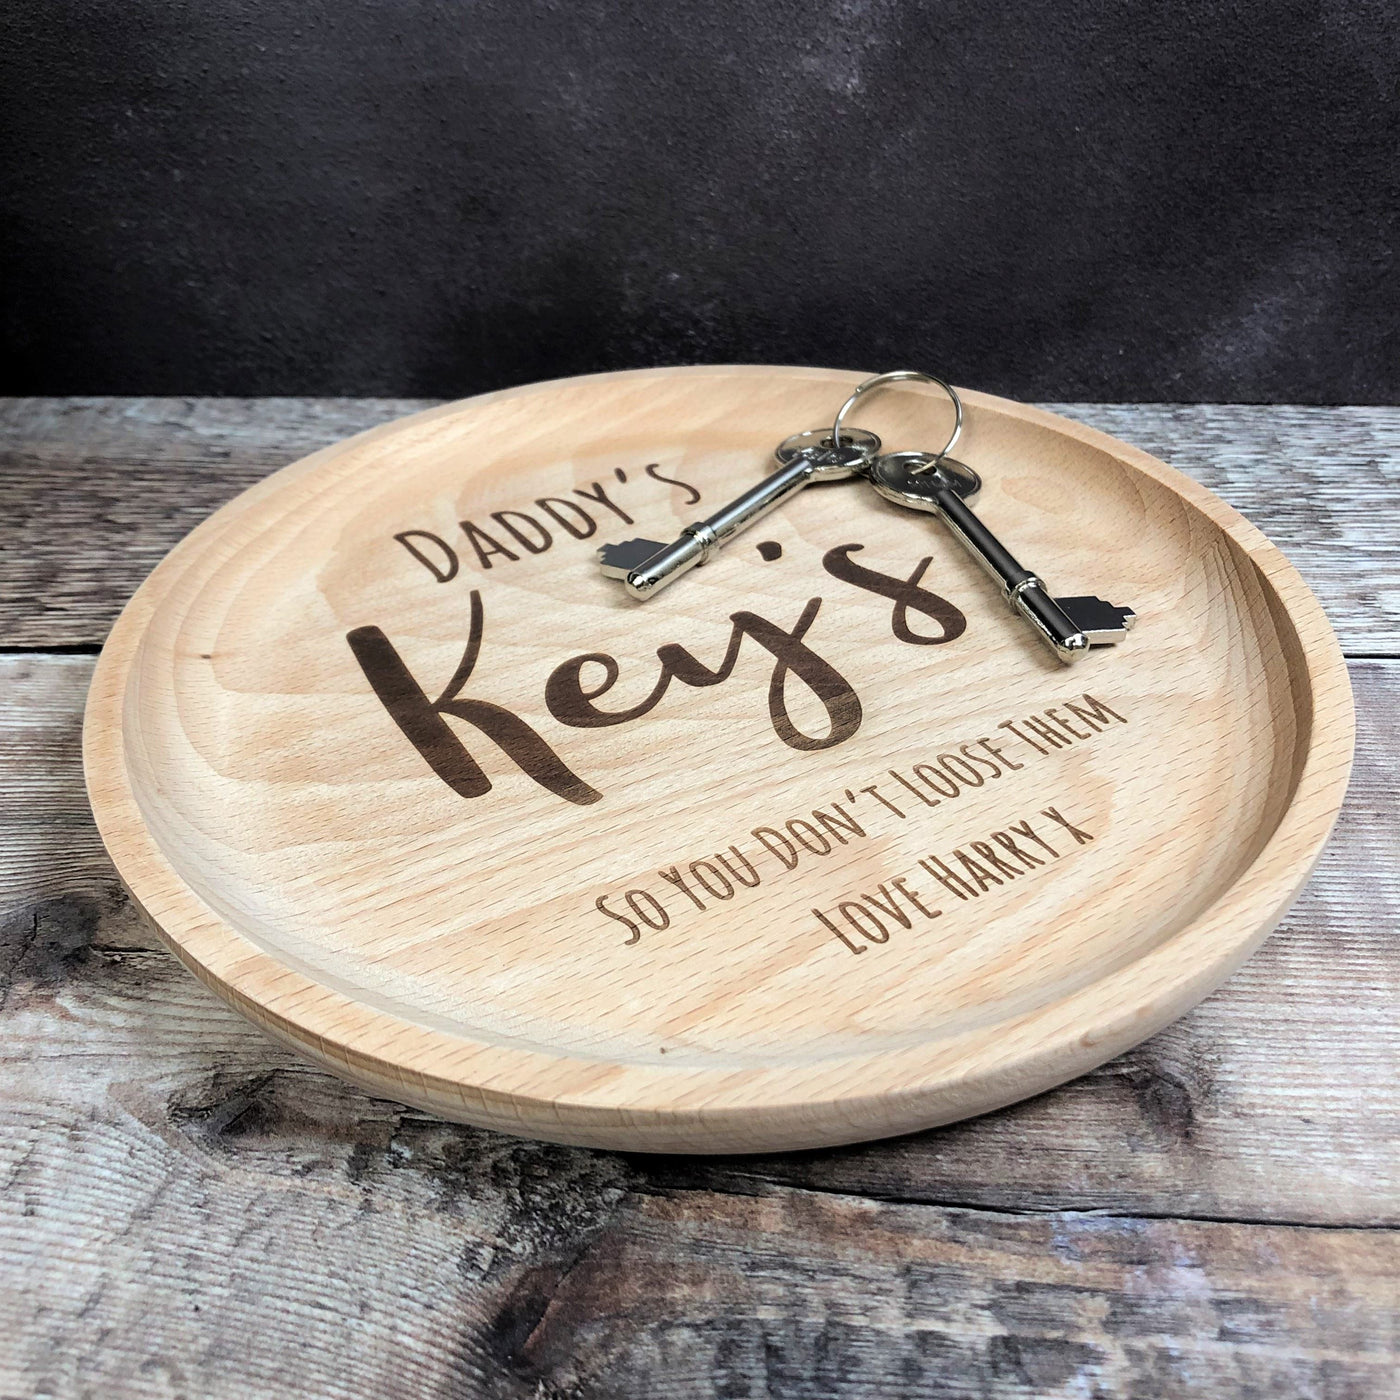 Personalised Beech Wooden Key Tray - Dad's Keys